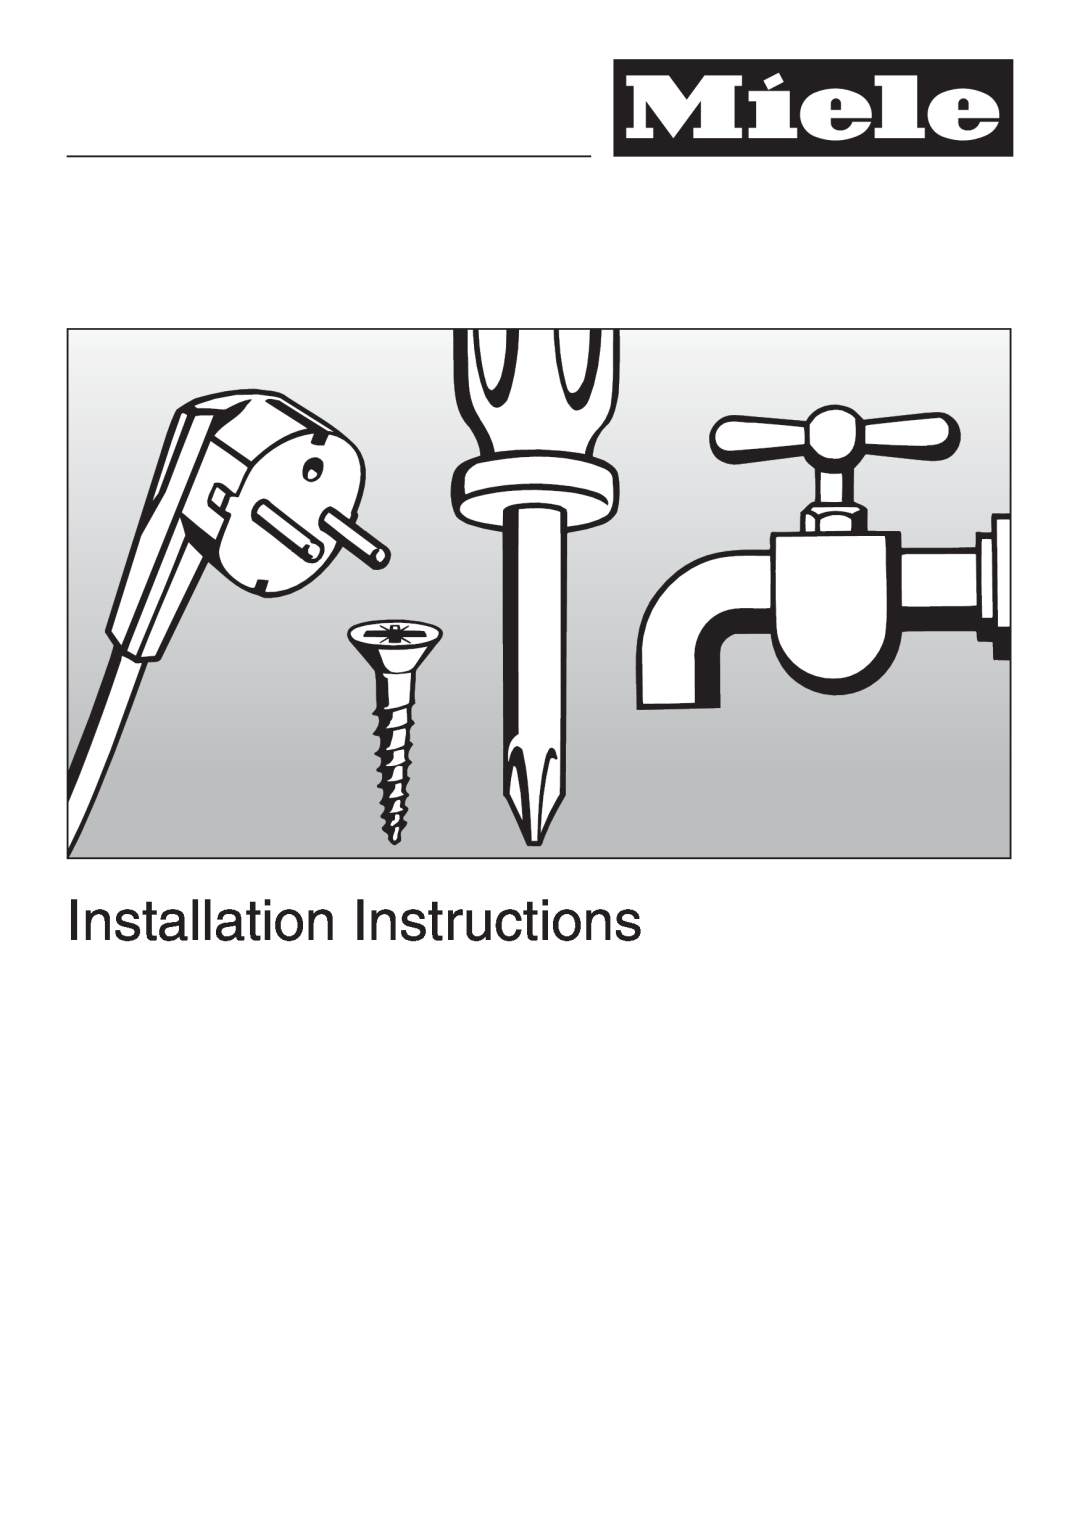 Miele DA 402 installation instructions Installation Instructions 